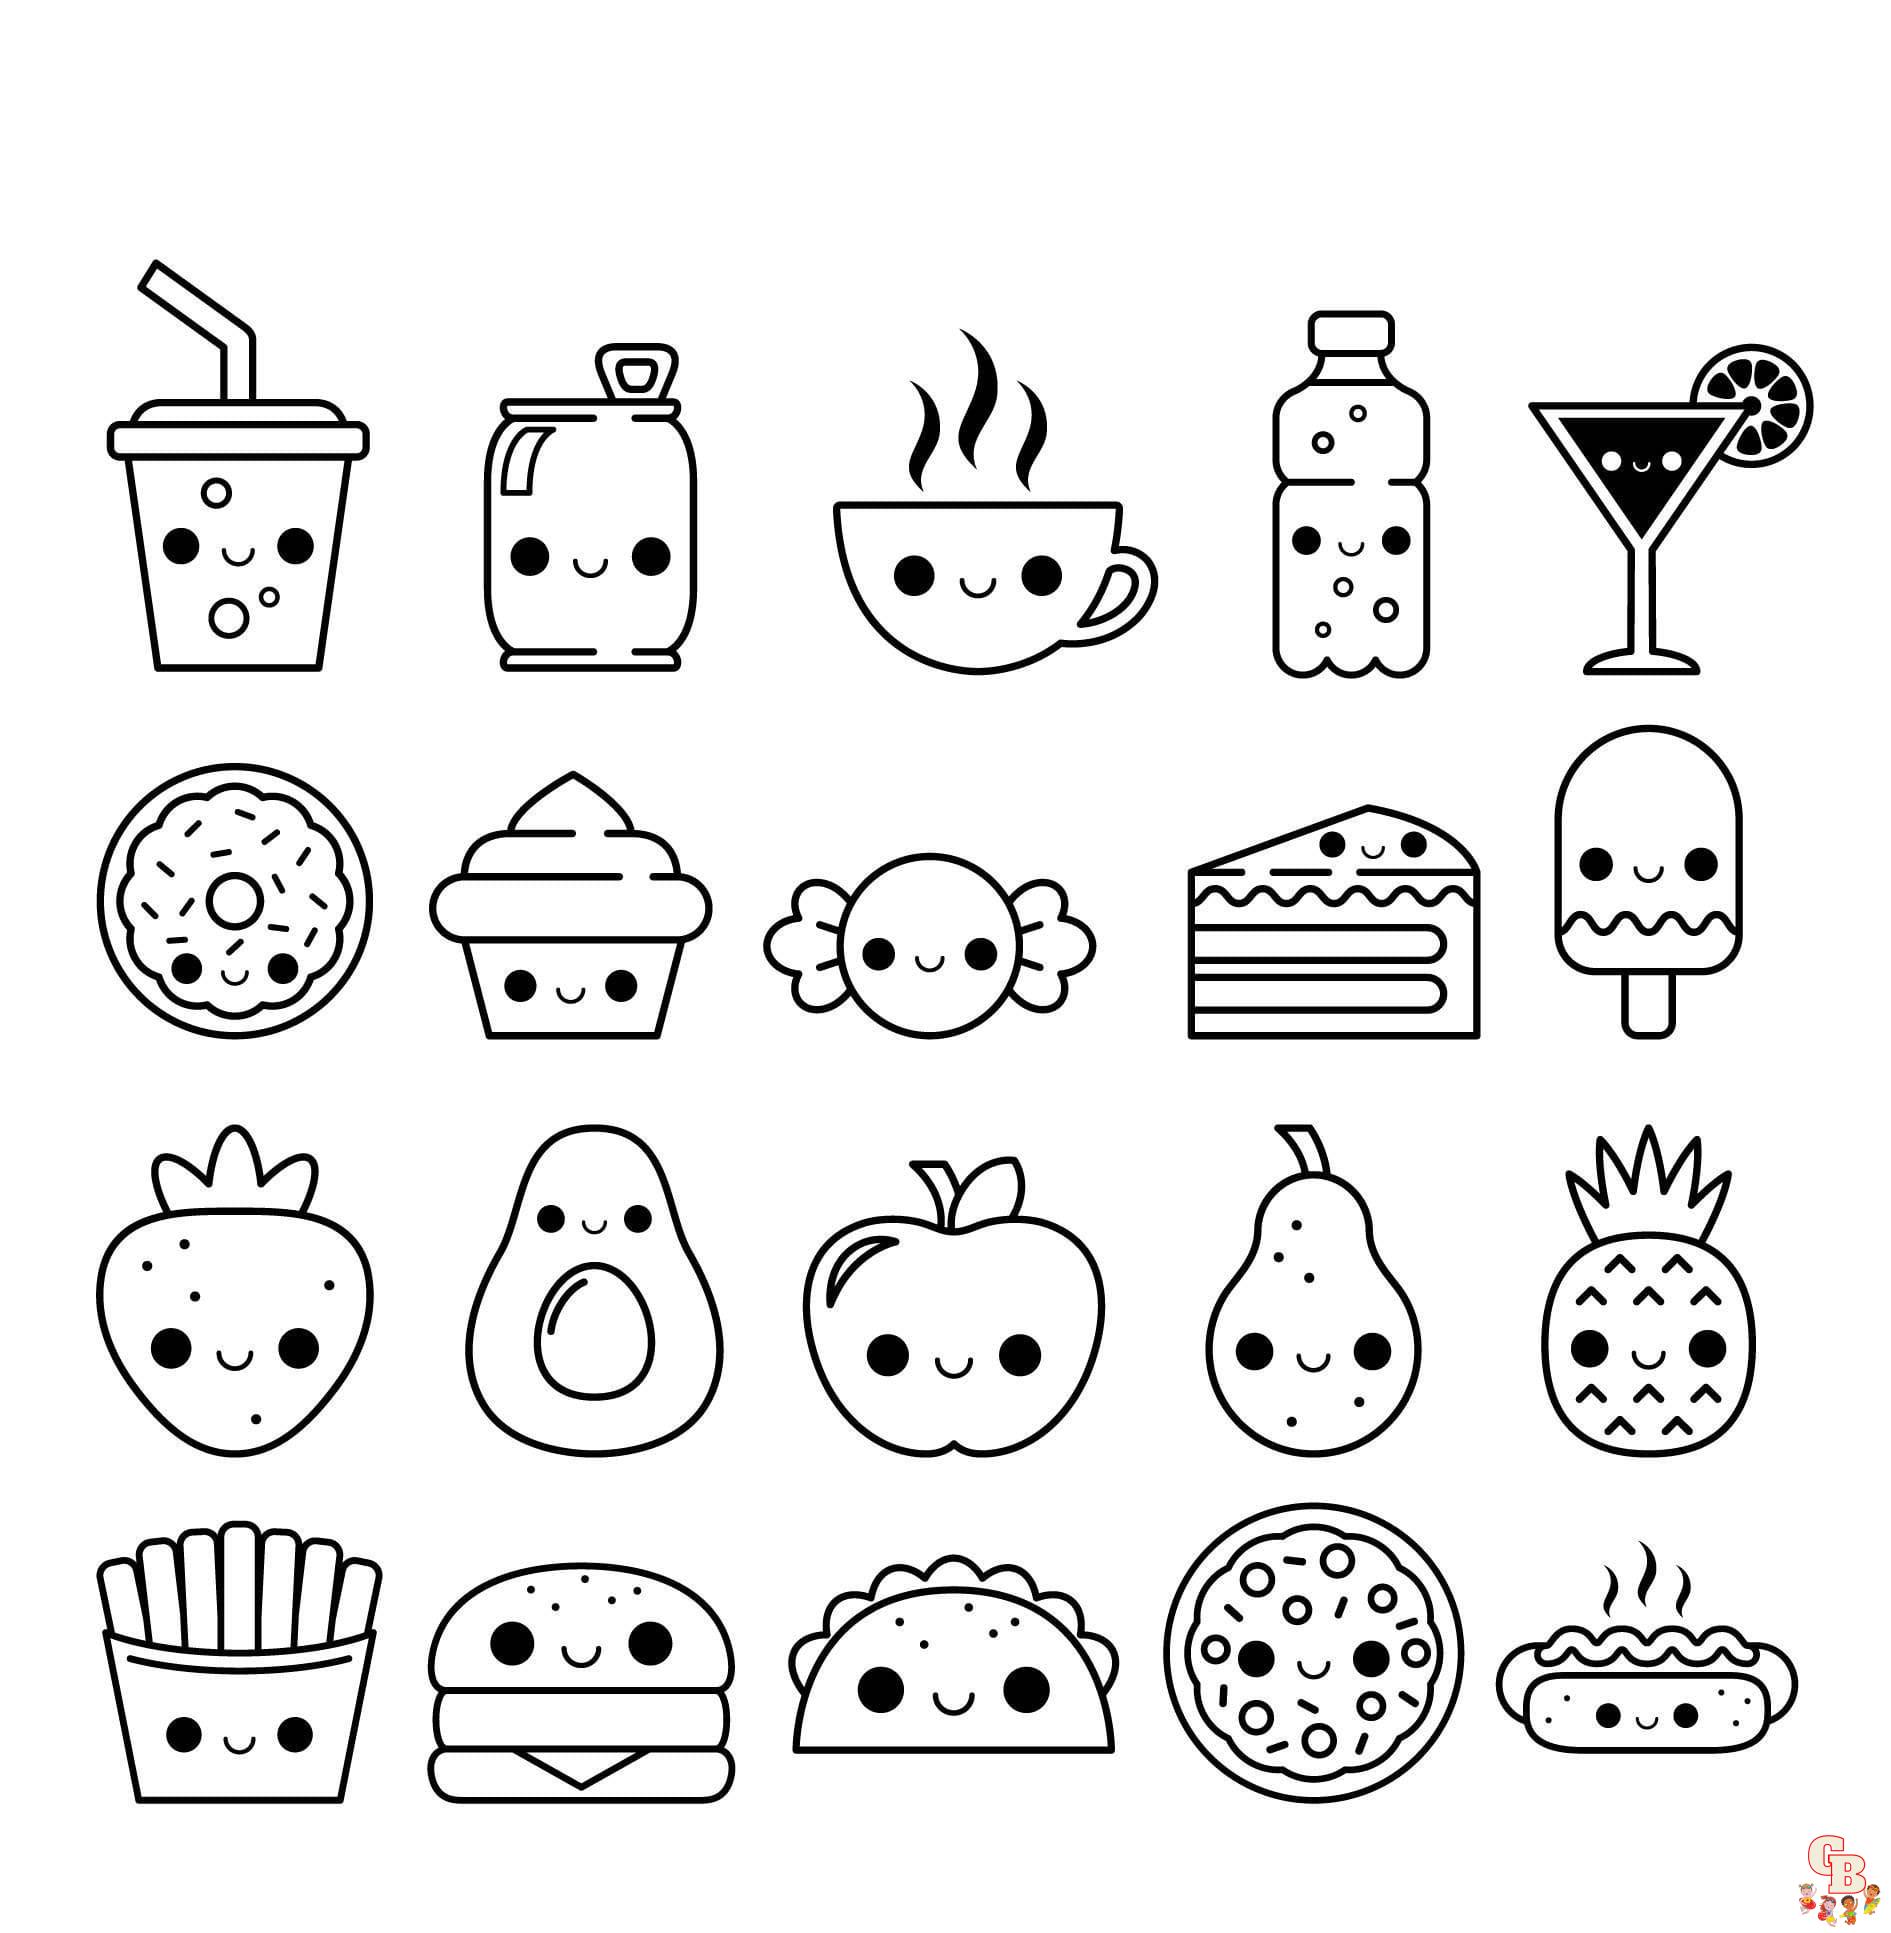 Free printable kawaii food coloring pages for kids